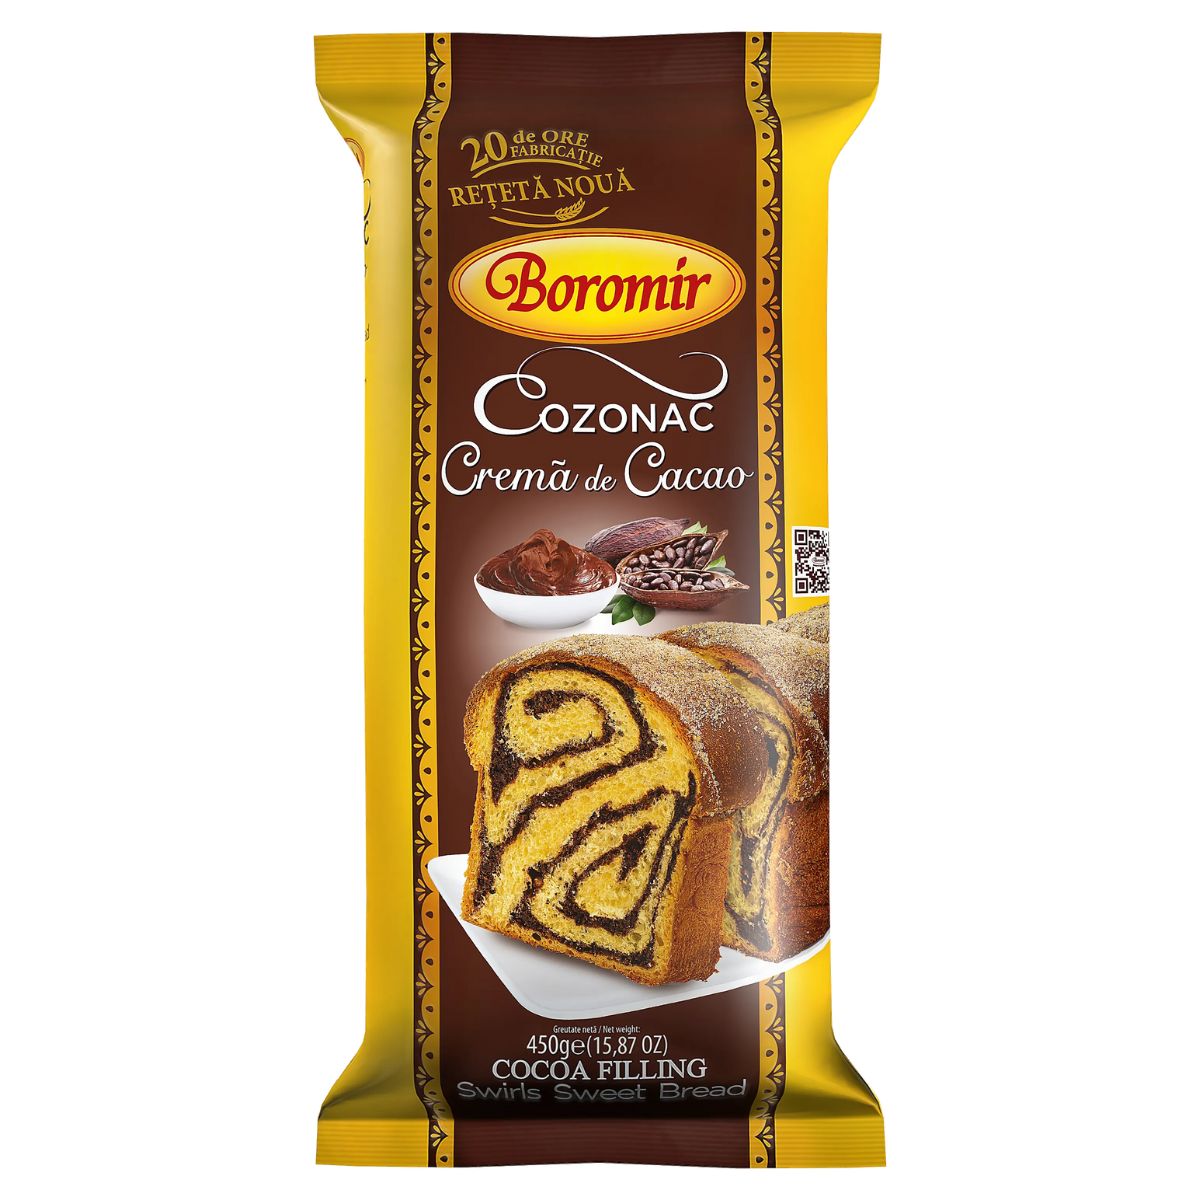 A bag of Boromir - Cozonac Cocoa - 400g with chocolate on it.